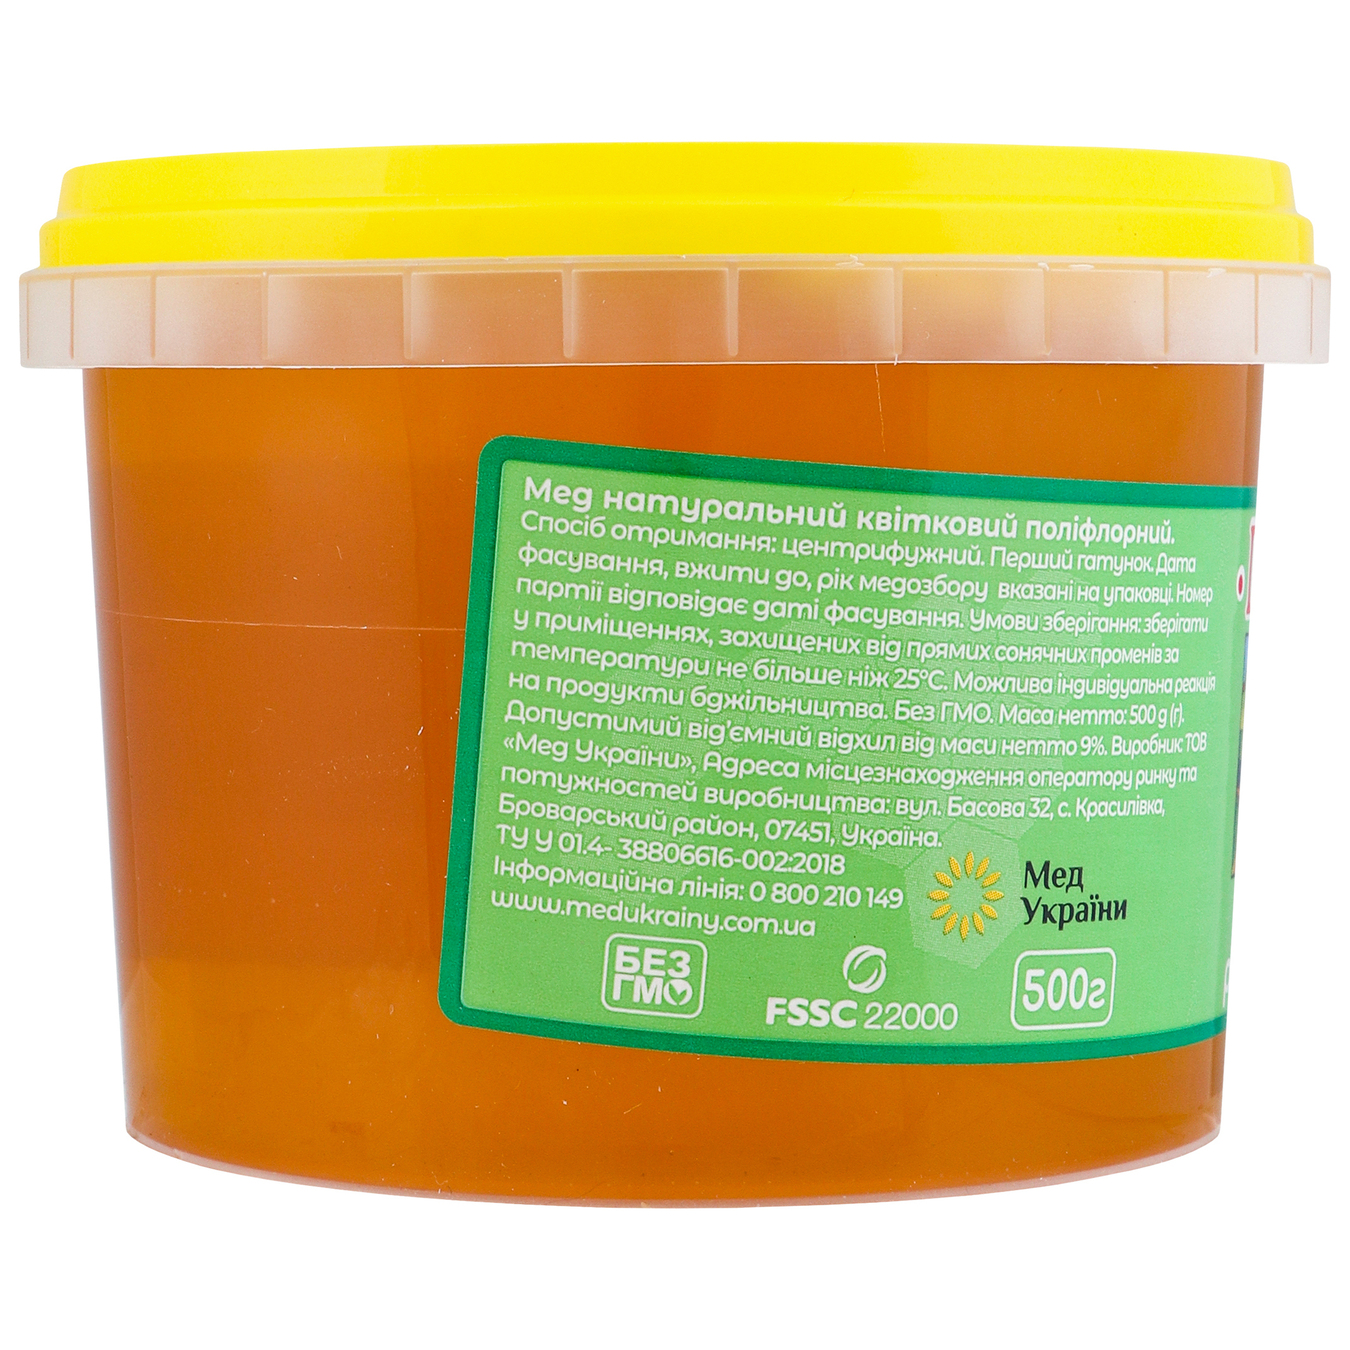 Natural multi-herb honey Apiary bucket 500g 4